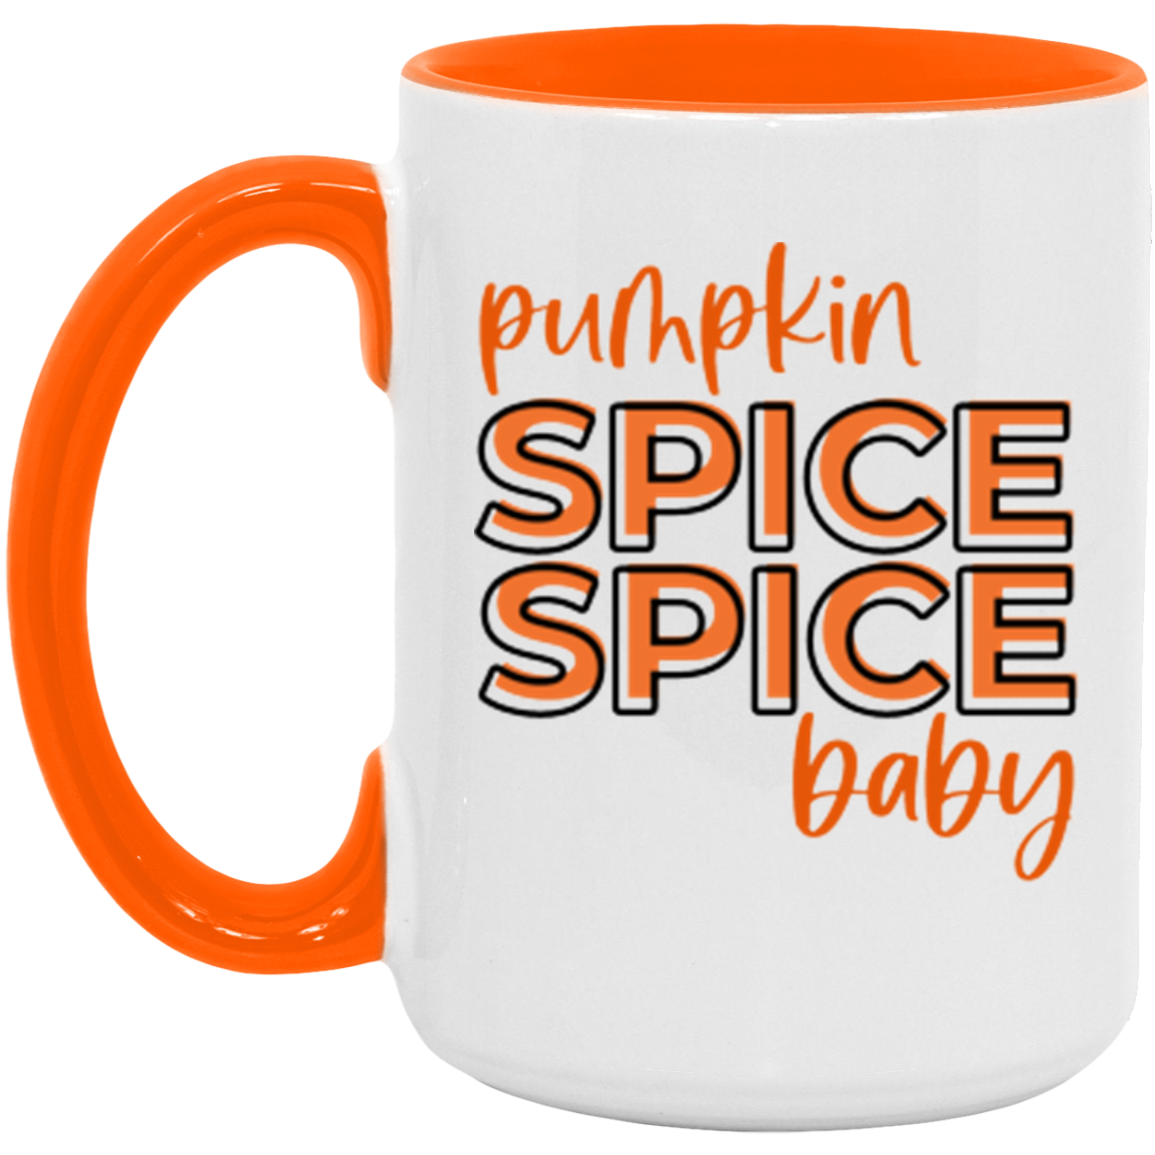 Pumpkin Spice Spice Baby Coffee Mug